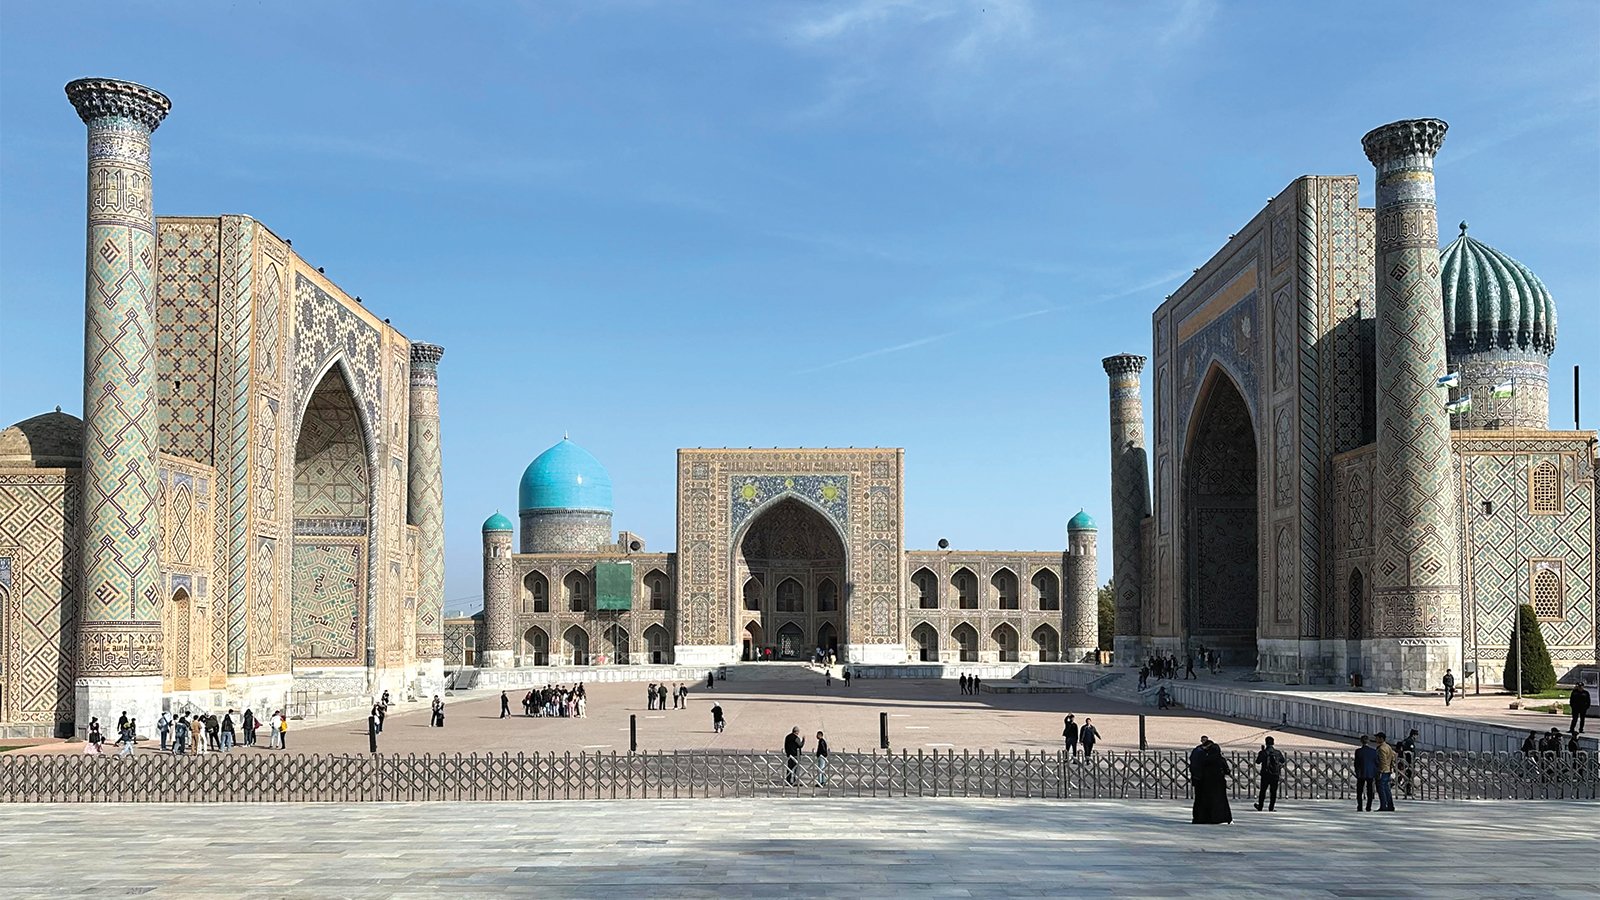 The Registan is Samarkand